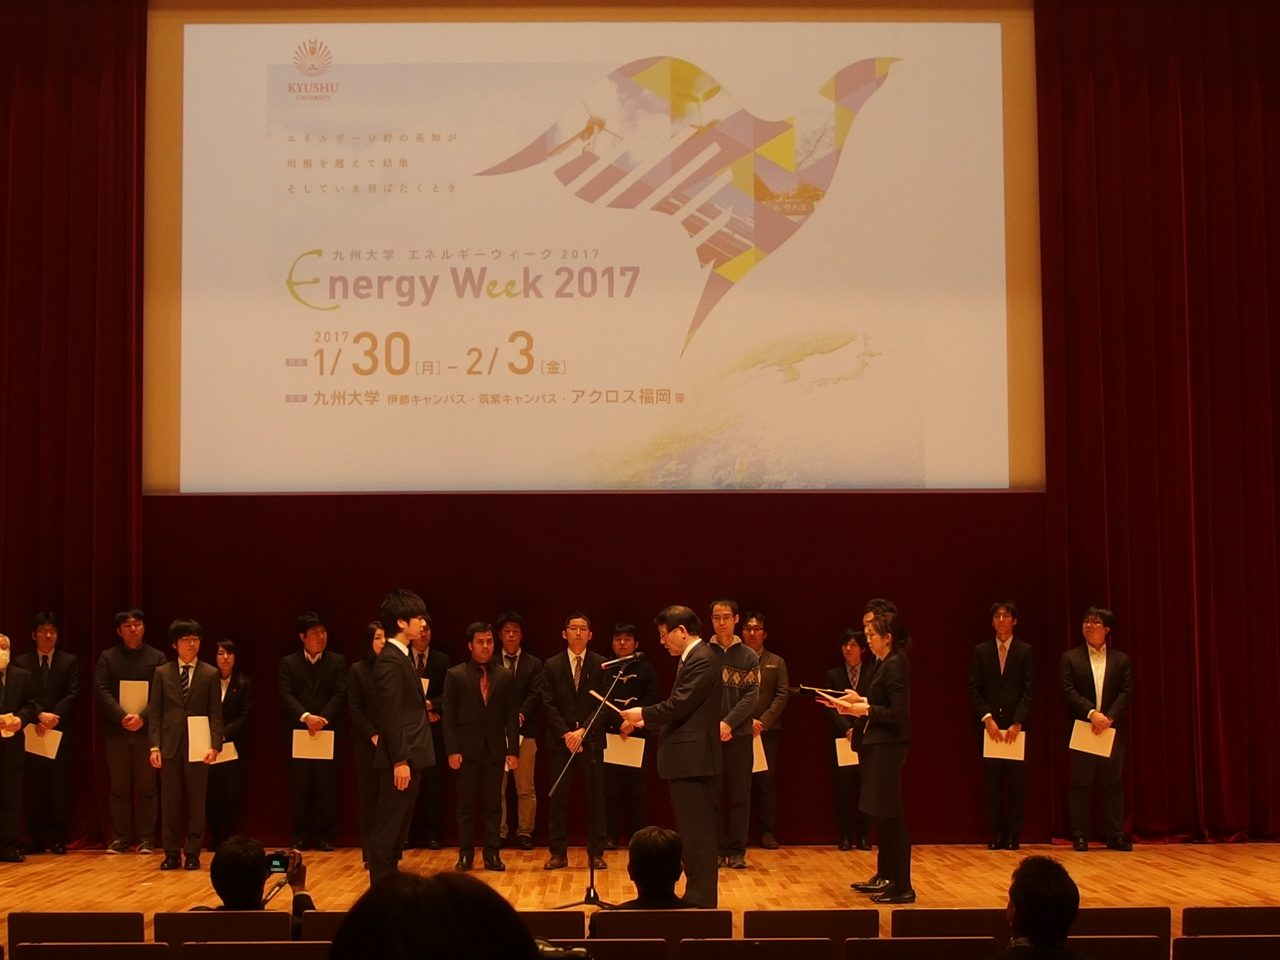 Takamura (D1/Department of Hydoroen Energy Systems) won Silver Prize in Kyushu University Energy Week 2017.